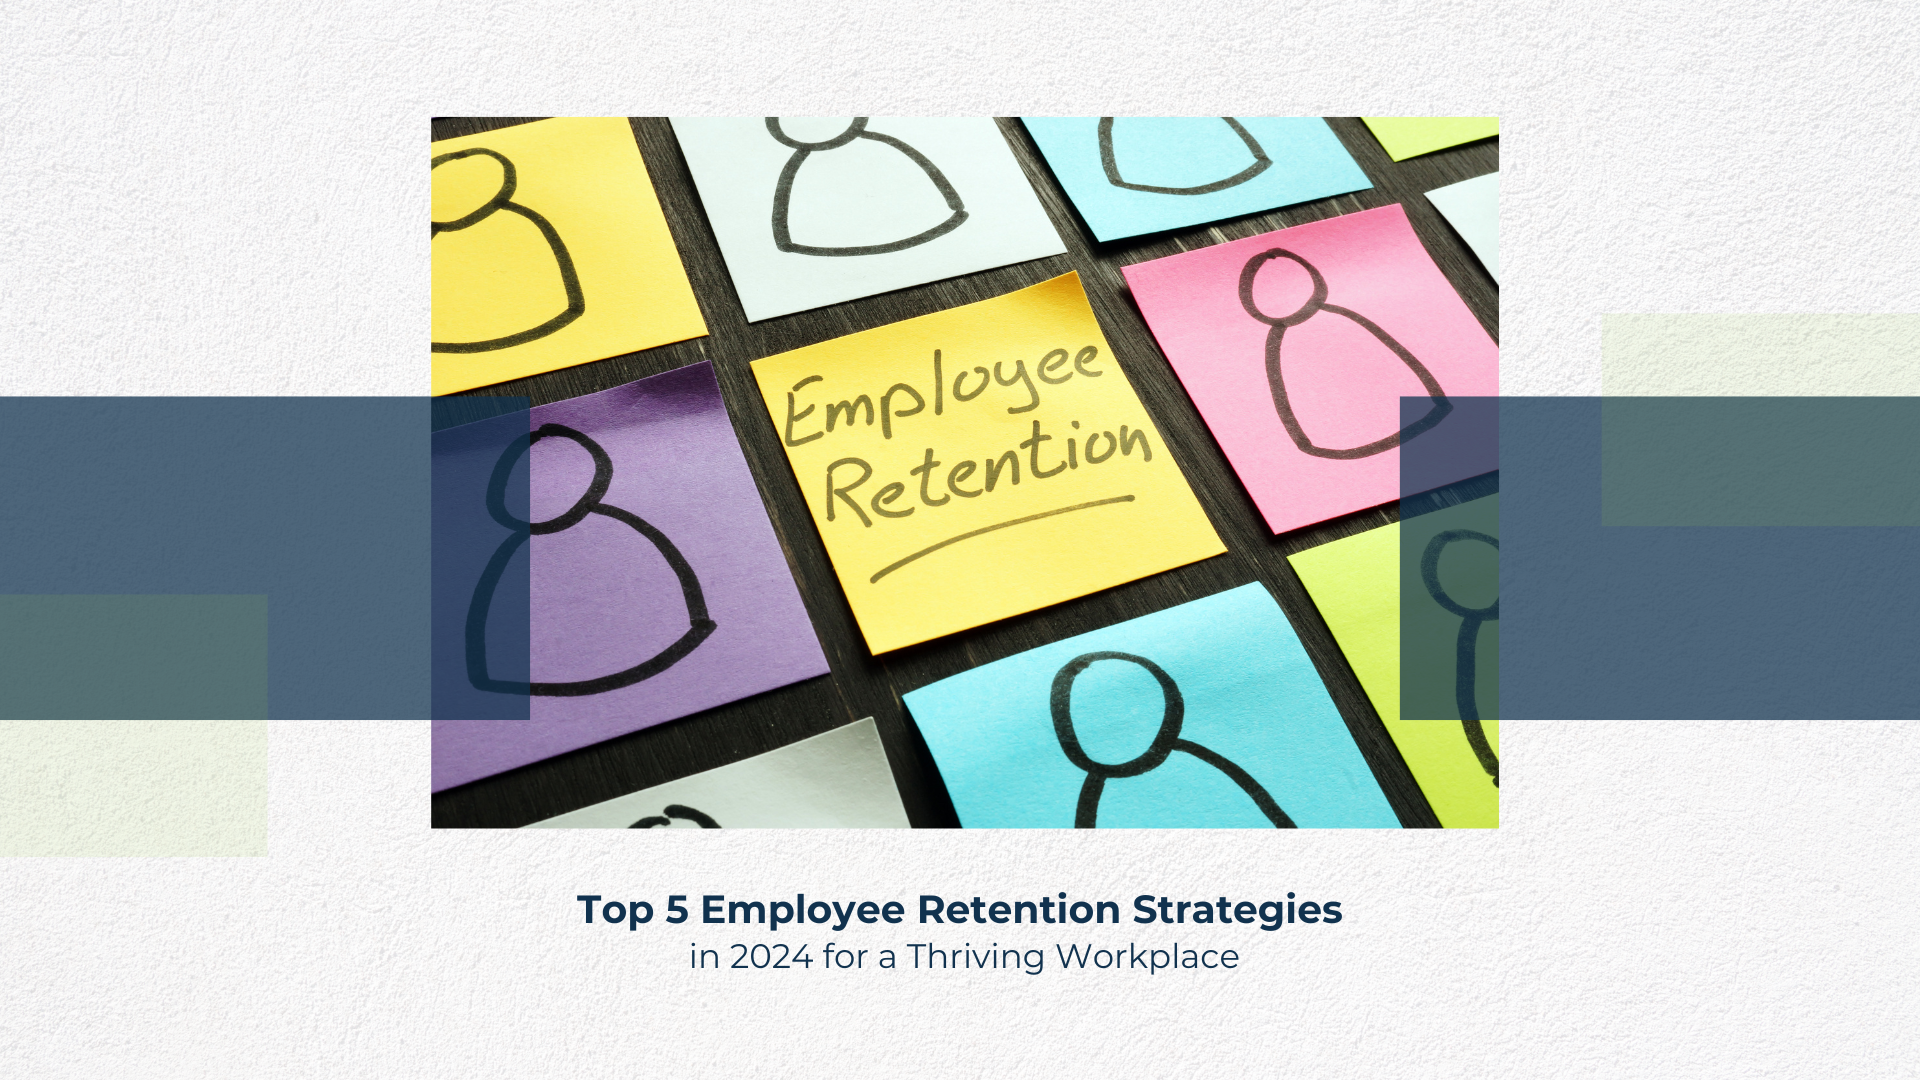 Employee retention strategies